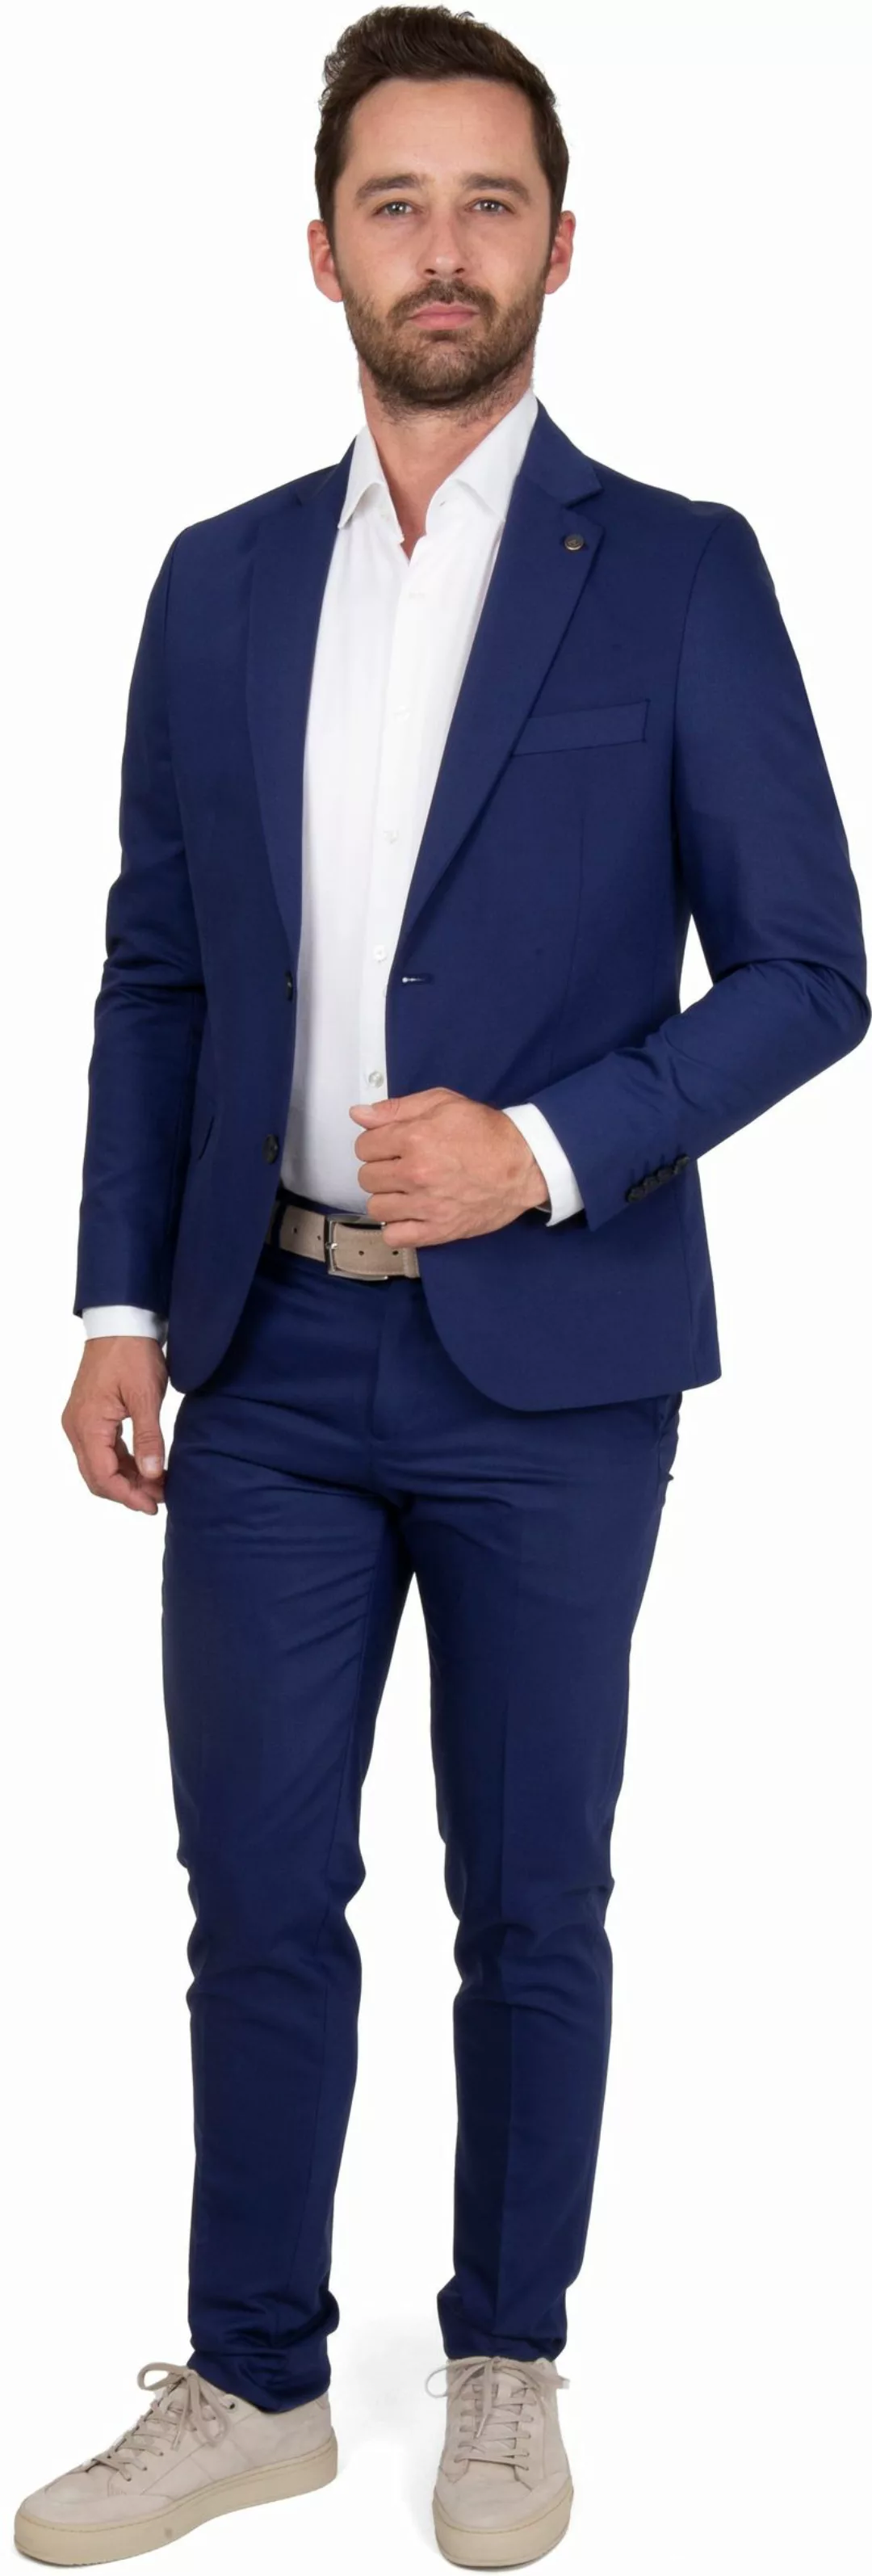 Suitable Suit Royal Blau - Größe 50 günstig online kaufen